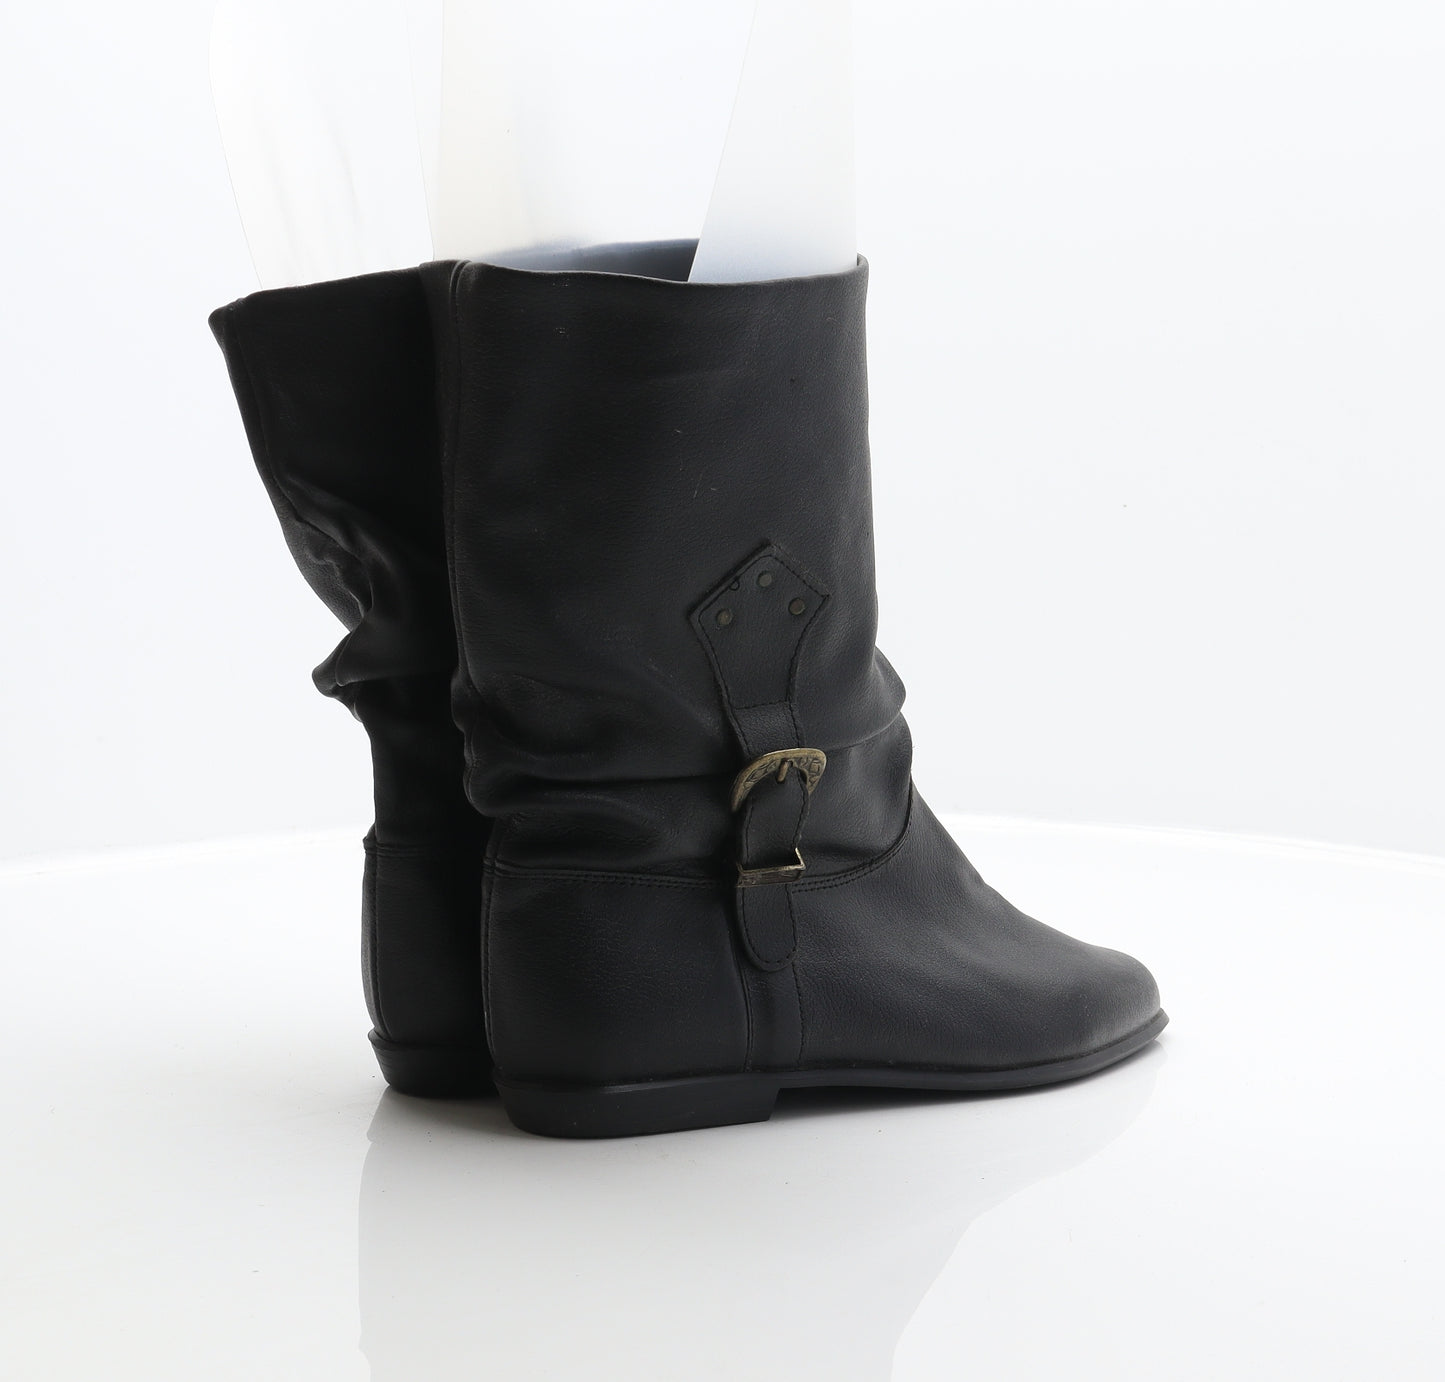 Preworn Womens Black Leather Cowboy Boot UK 7 40